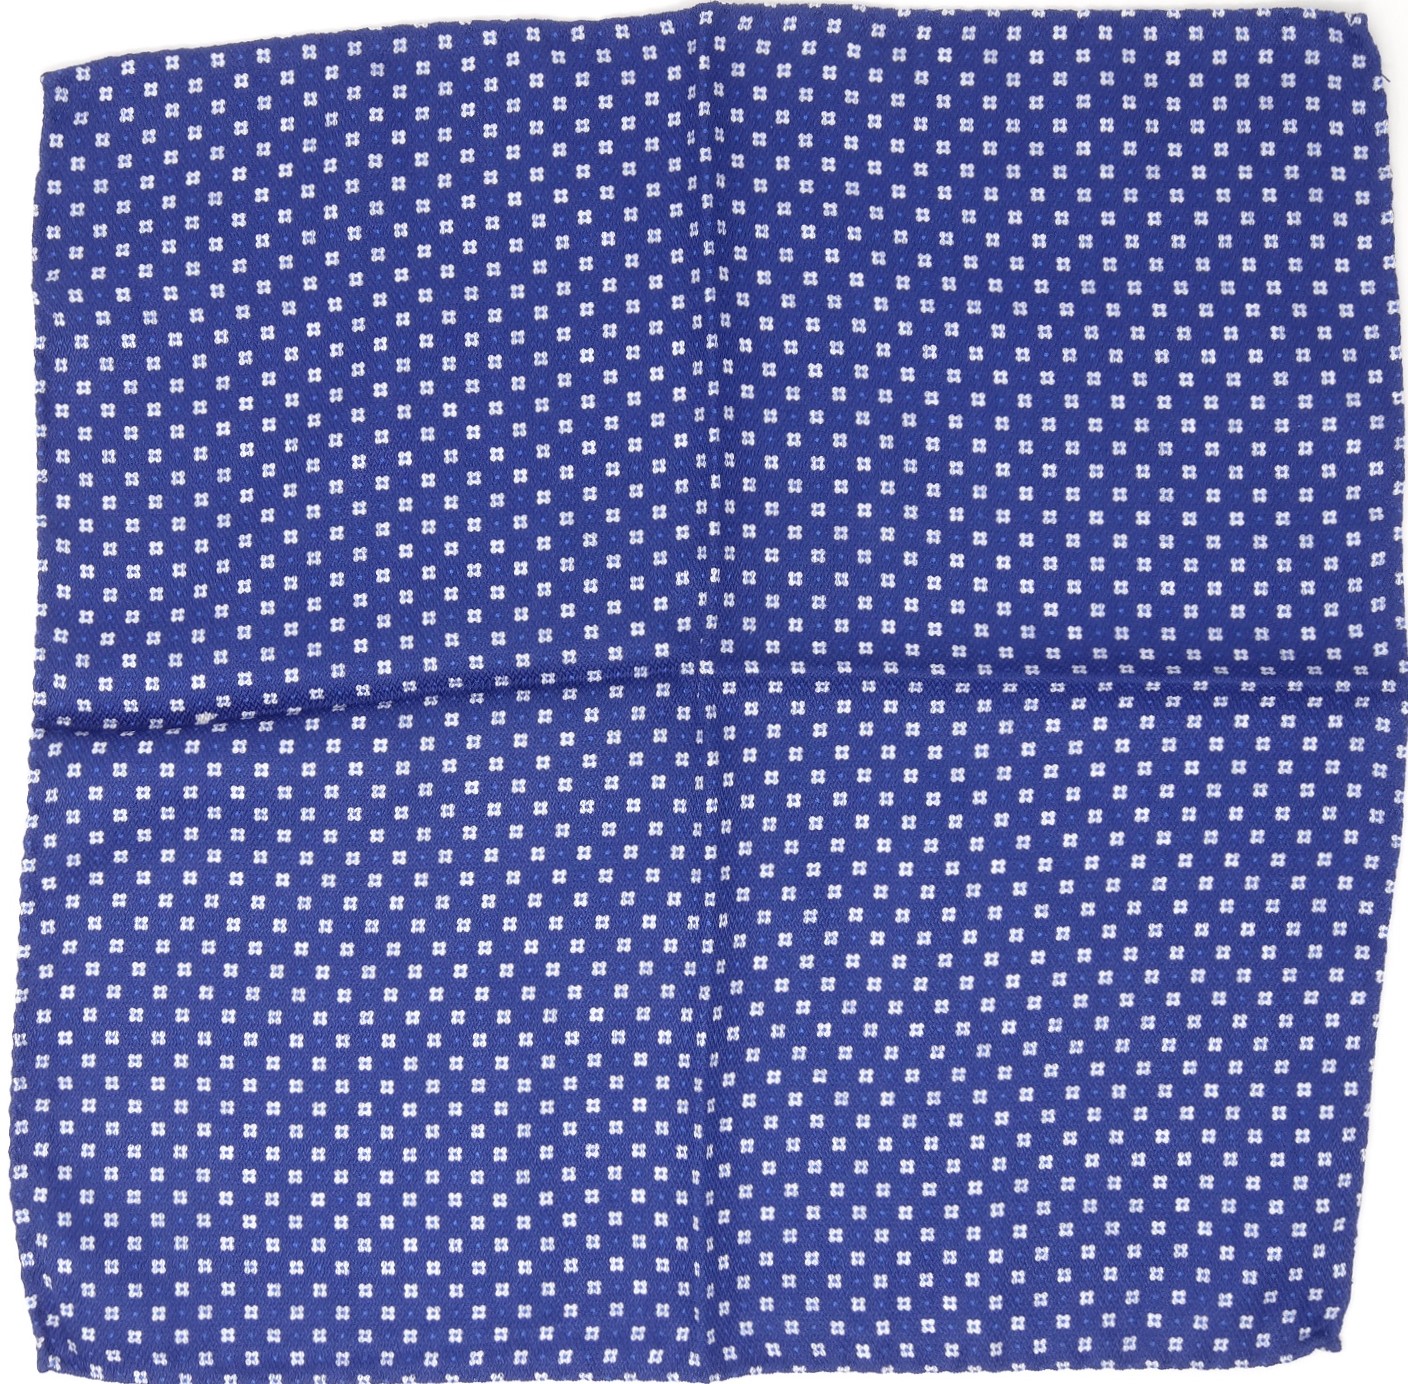 Patch cloth 2-sided (100% silk) 